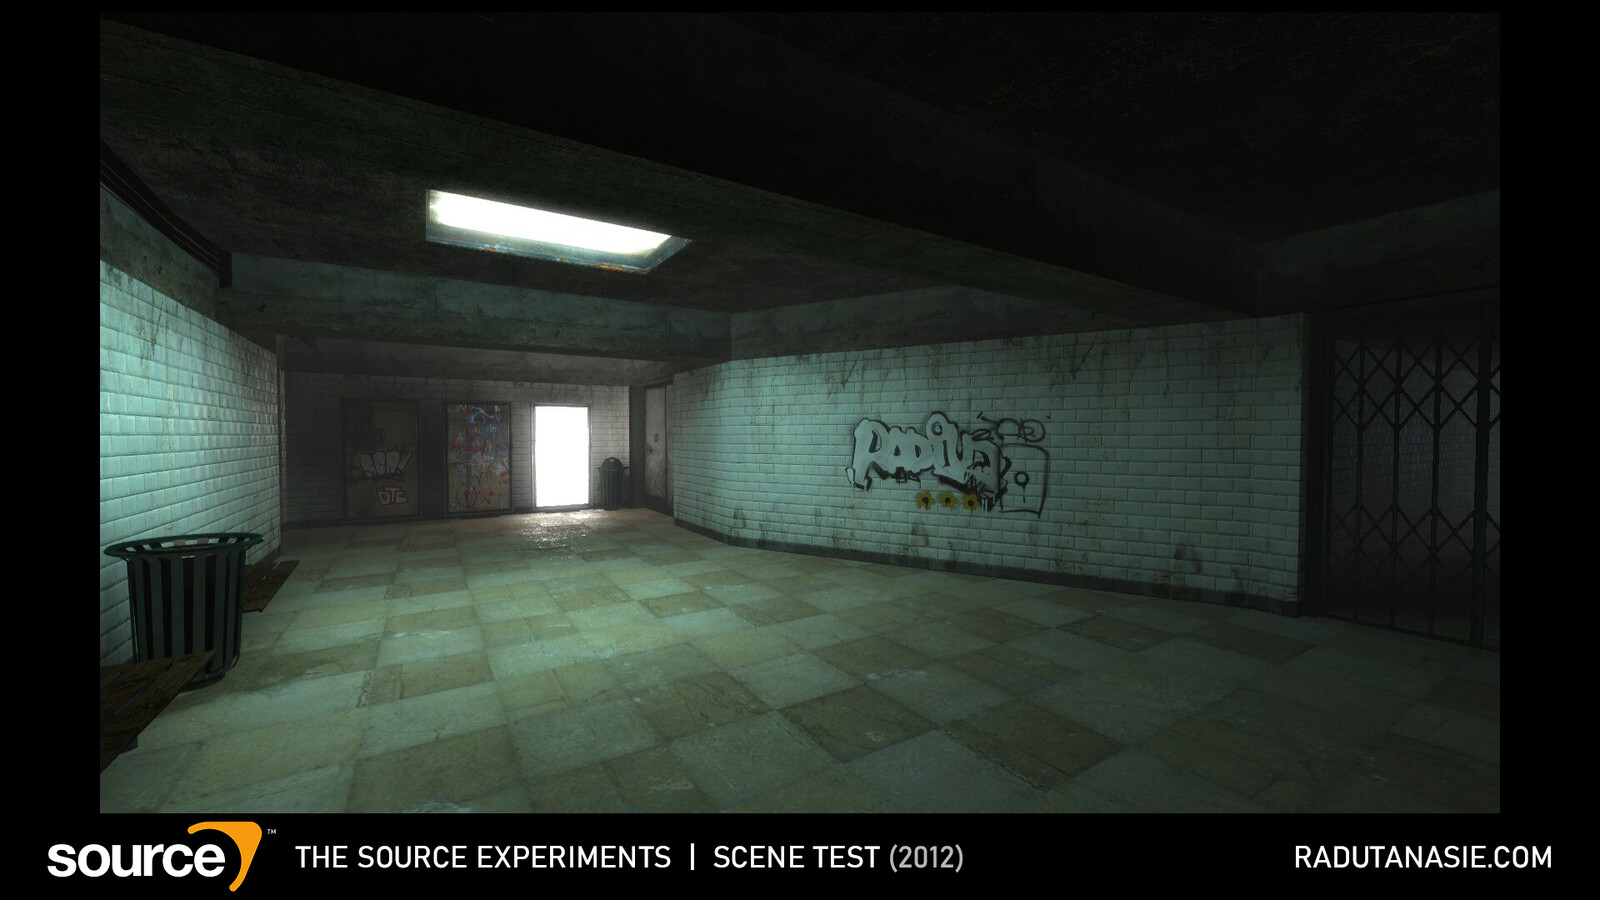 Subway scene created in Half-Life 2